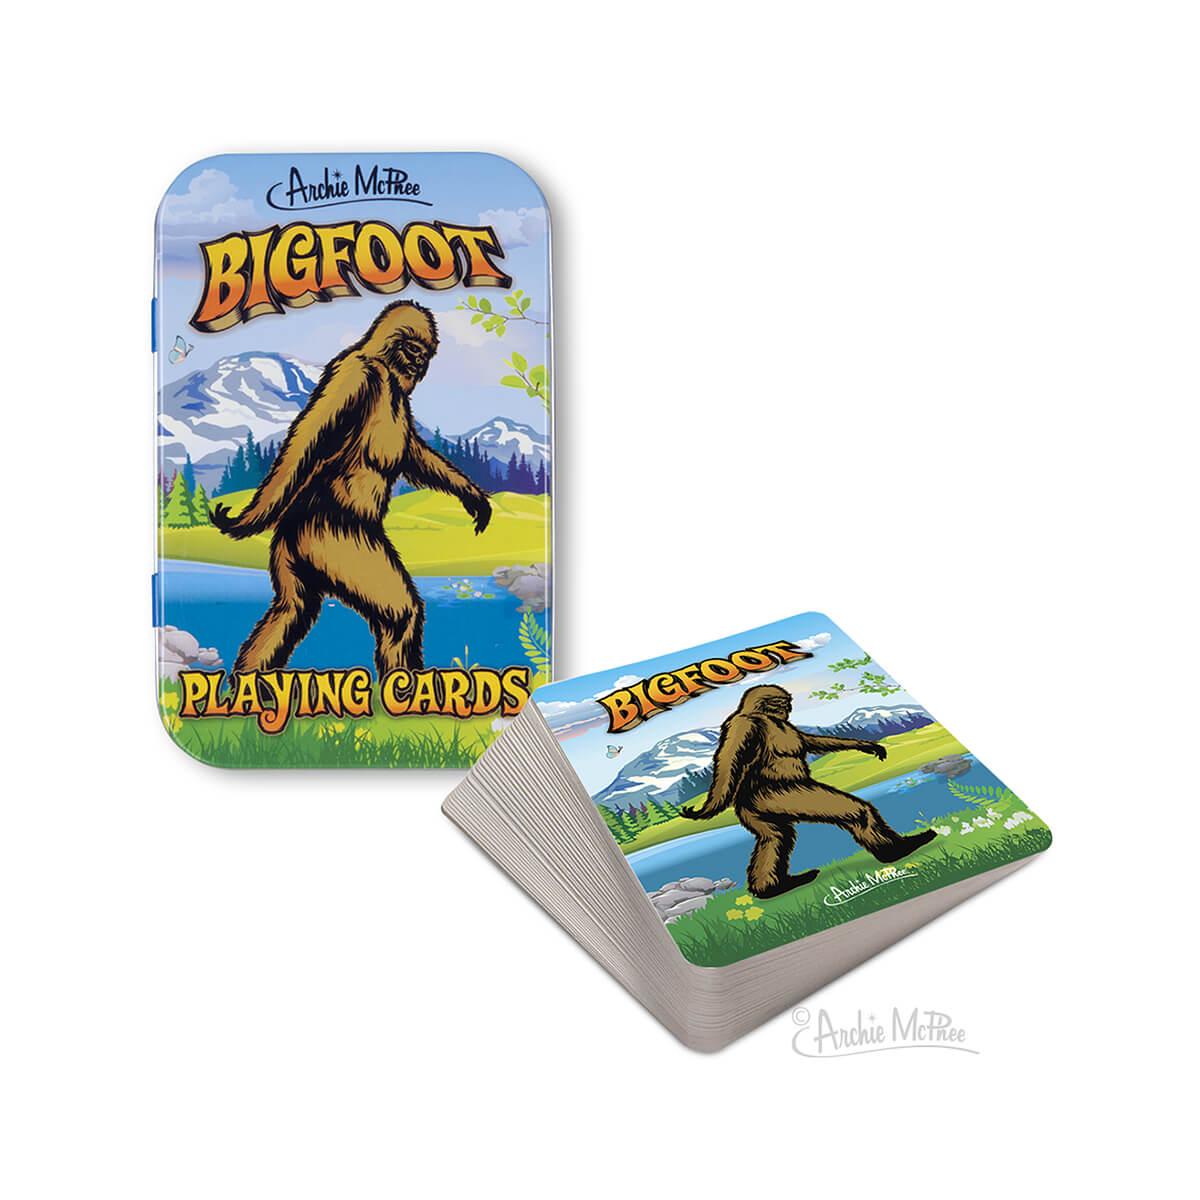  Bigfoot Playing Cards